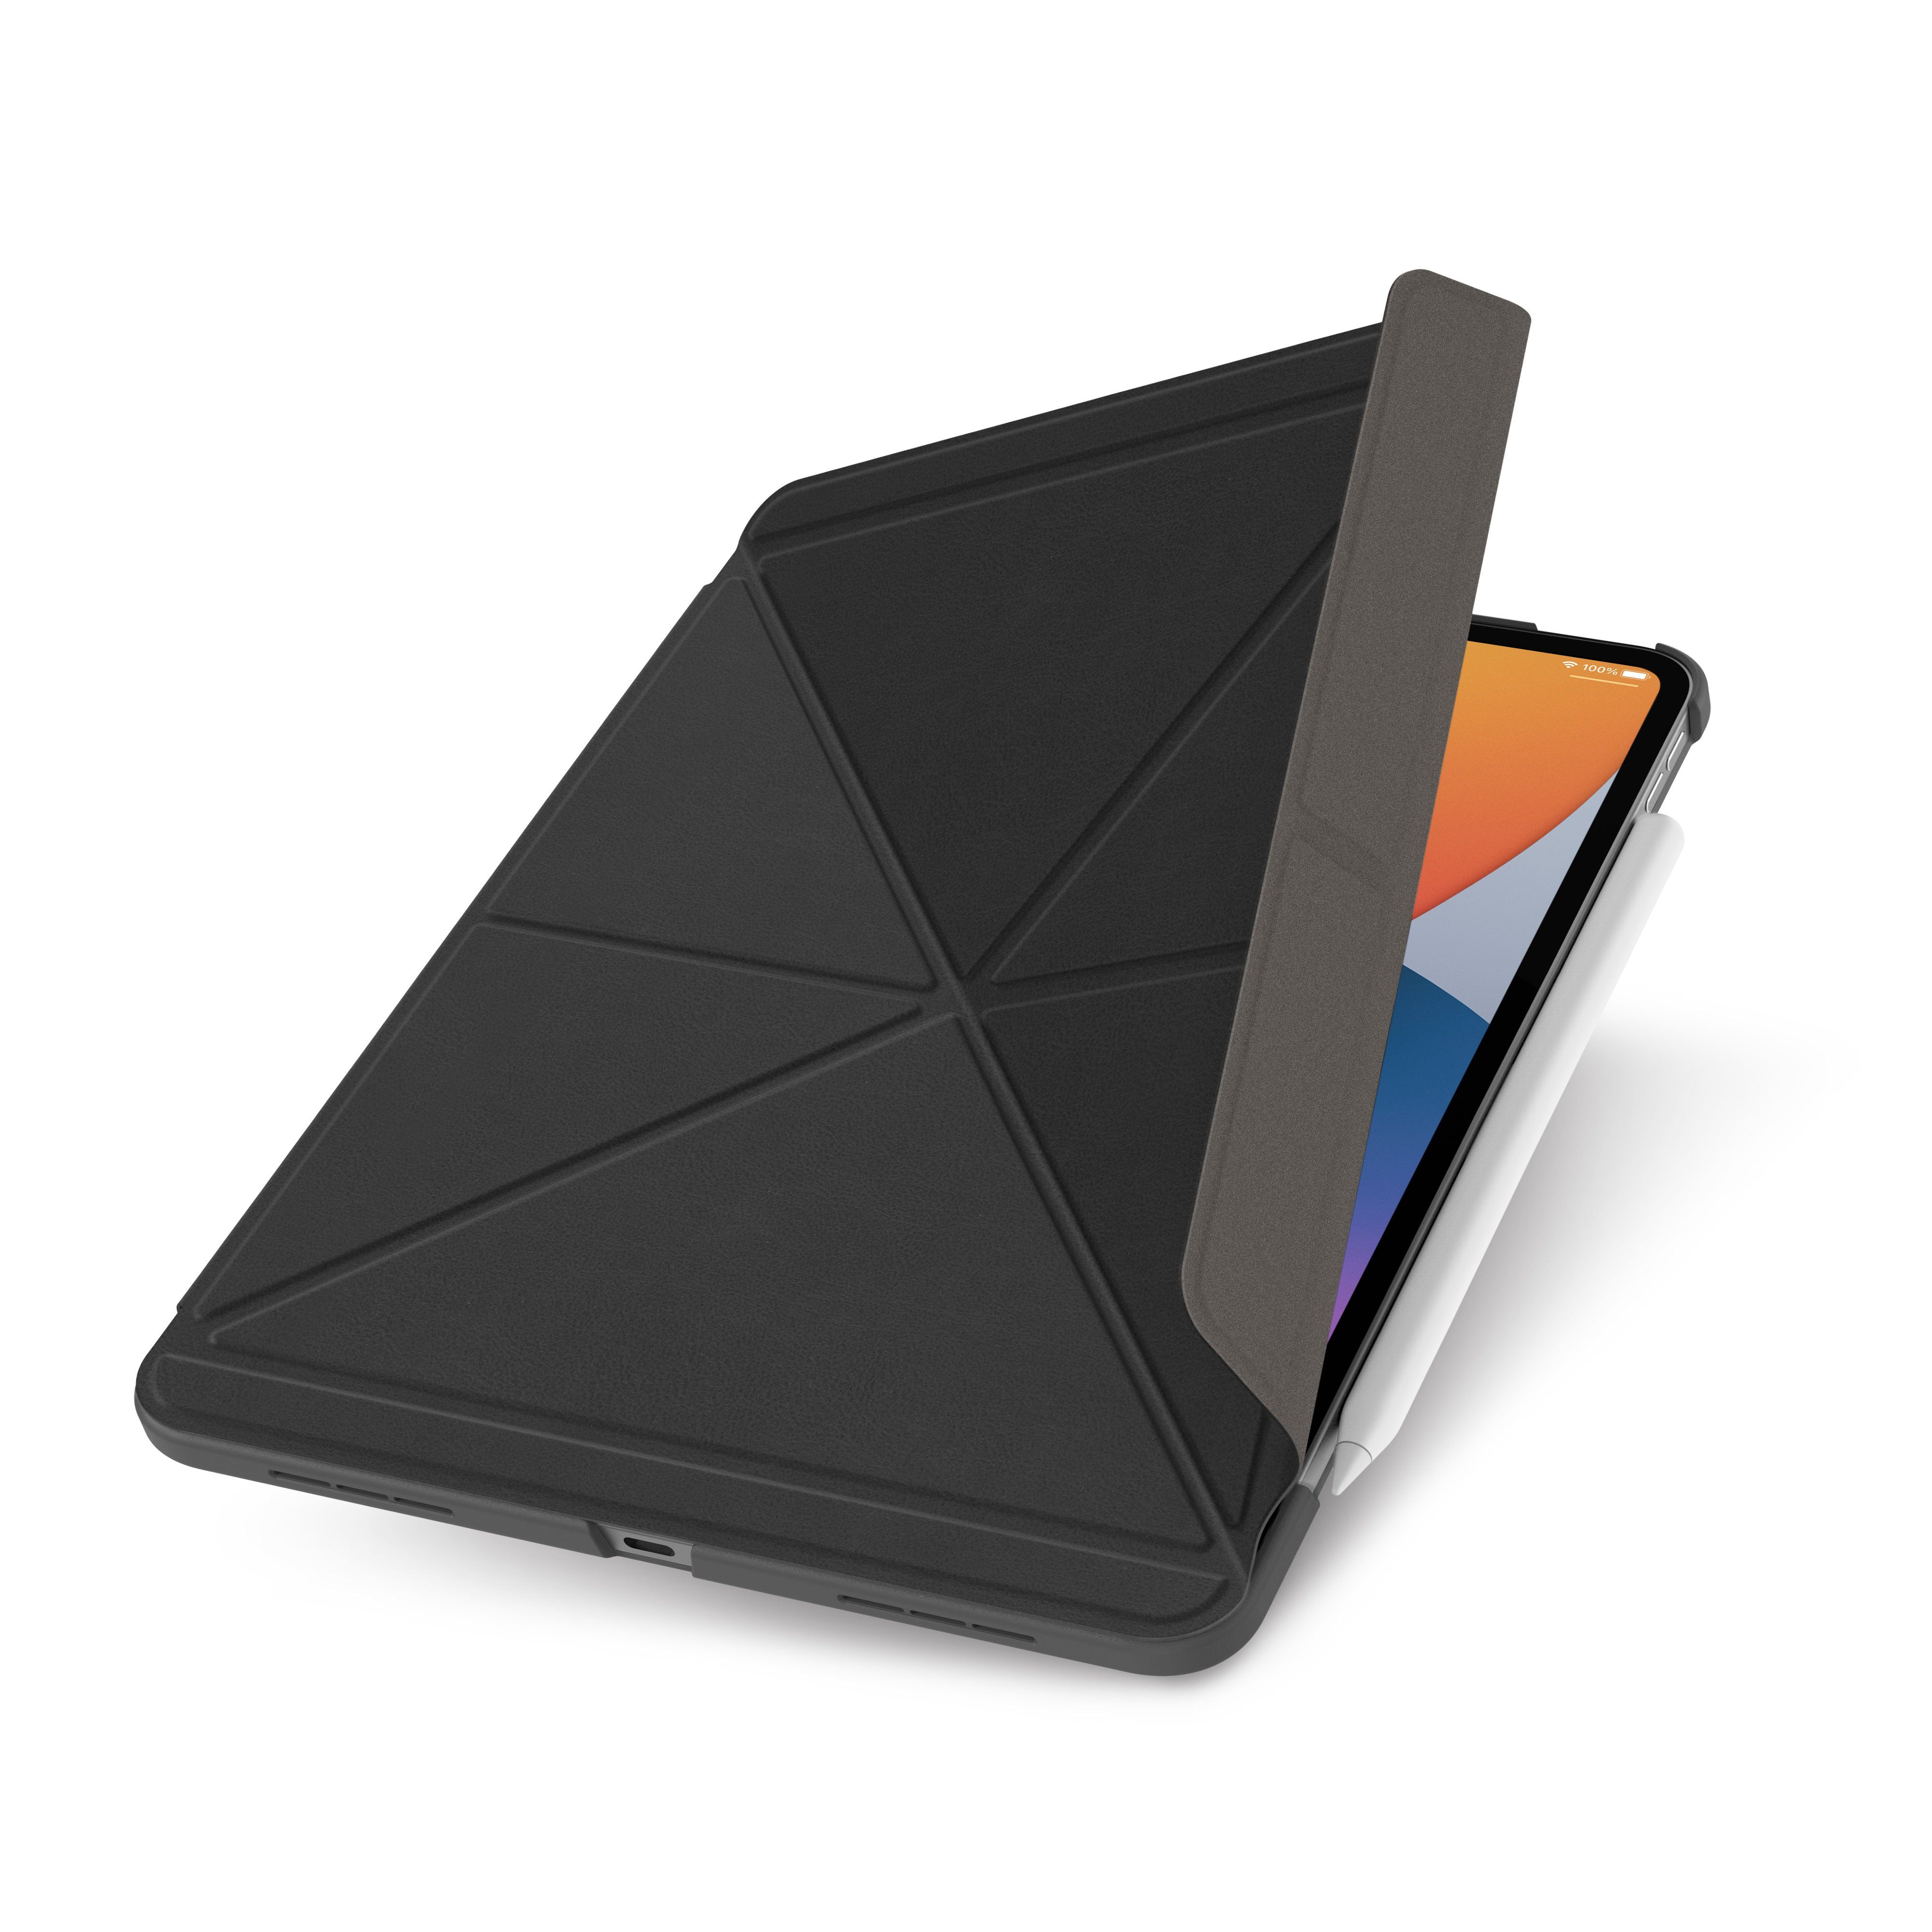 Moshi Versa Cover for iPad Air 10.9/iPad Pro 11 Charcoal Black